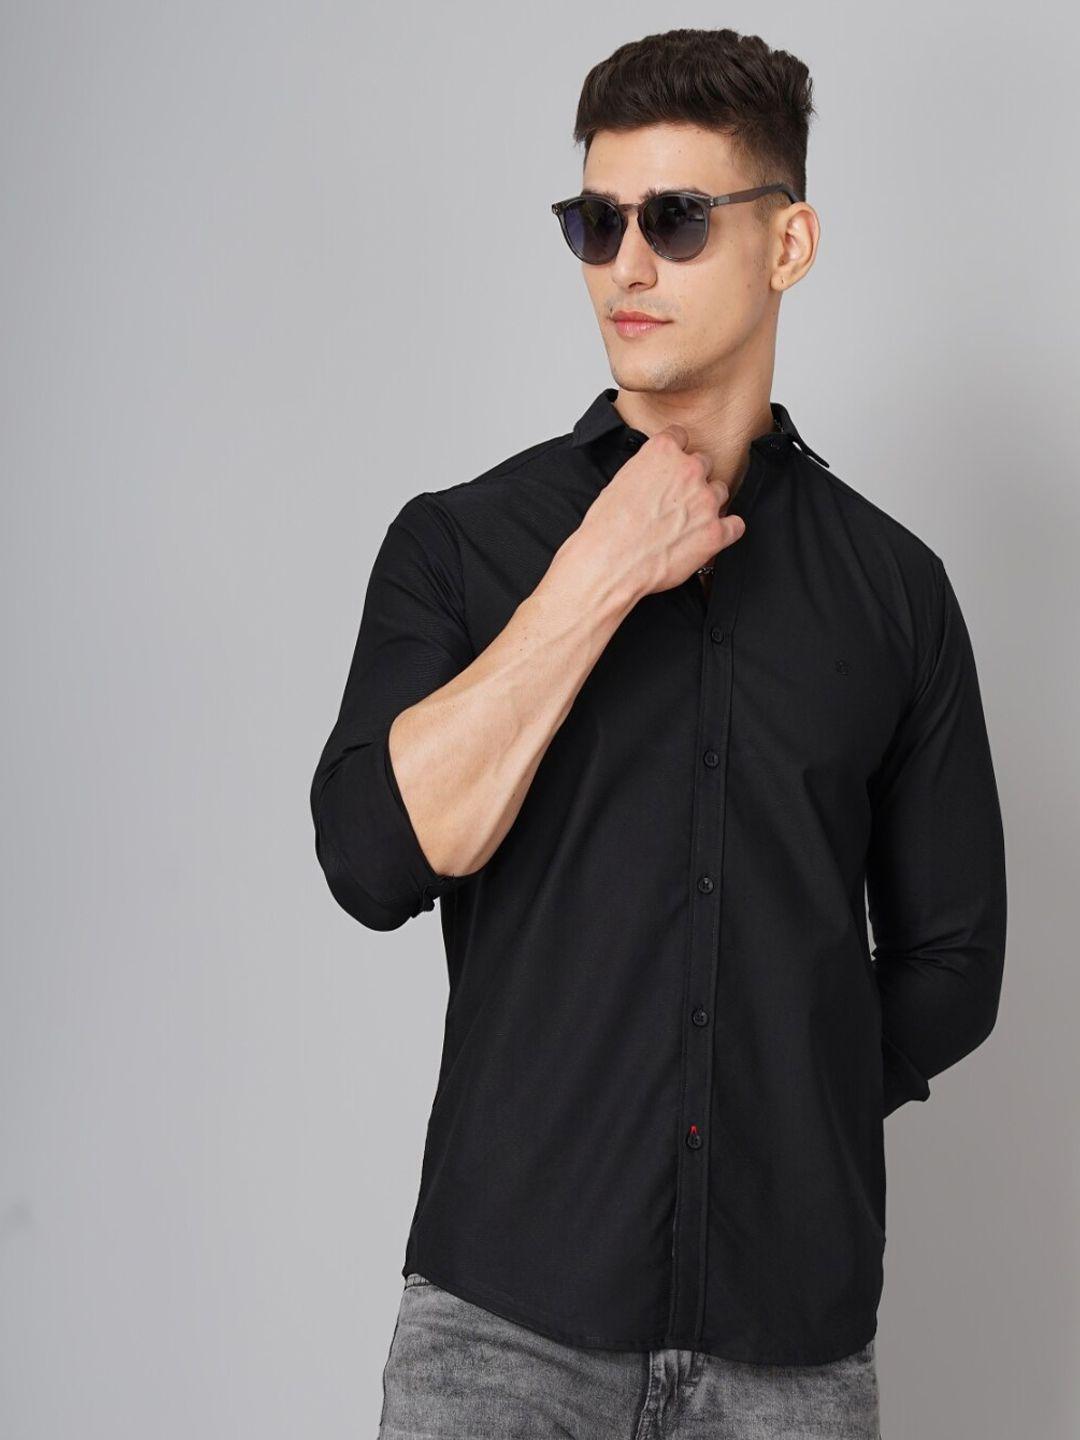 paul-street-men-black-standard-slim-fit-opaque-casual-shirt